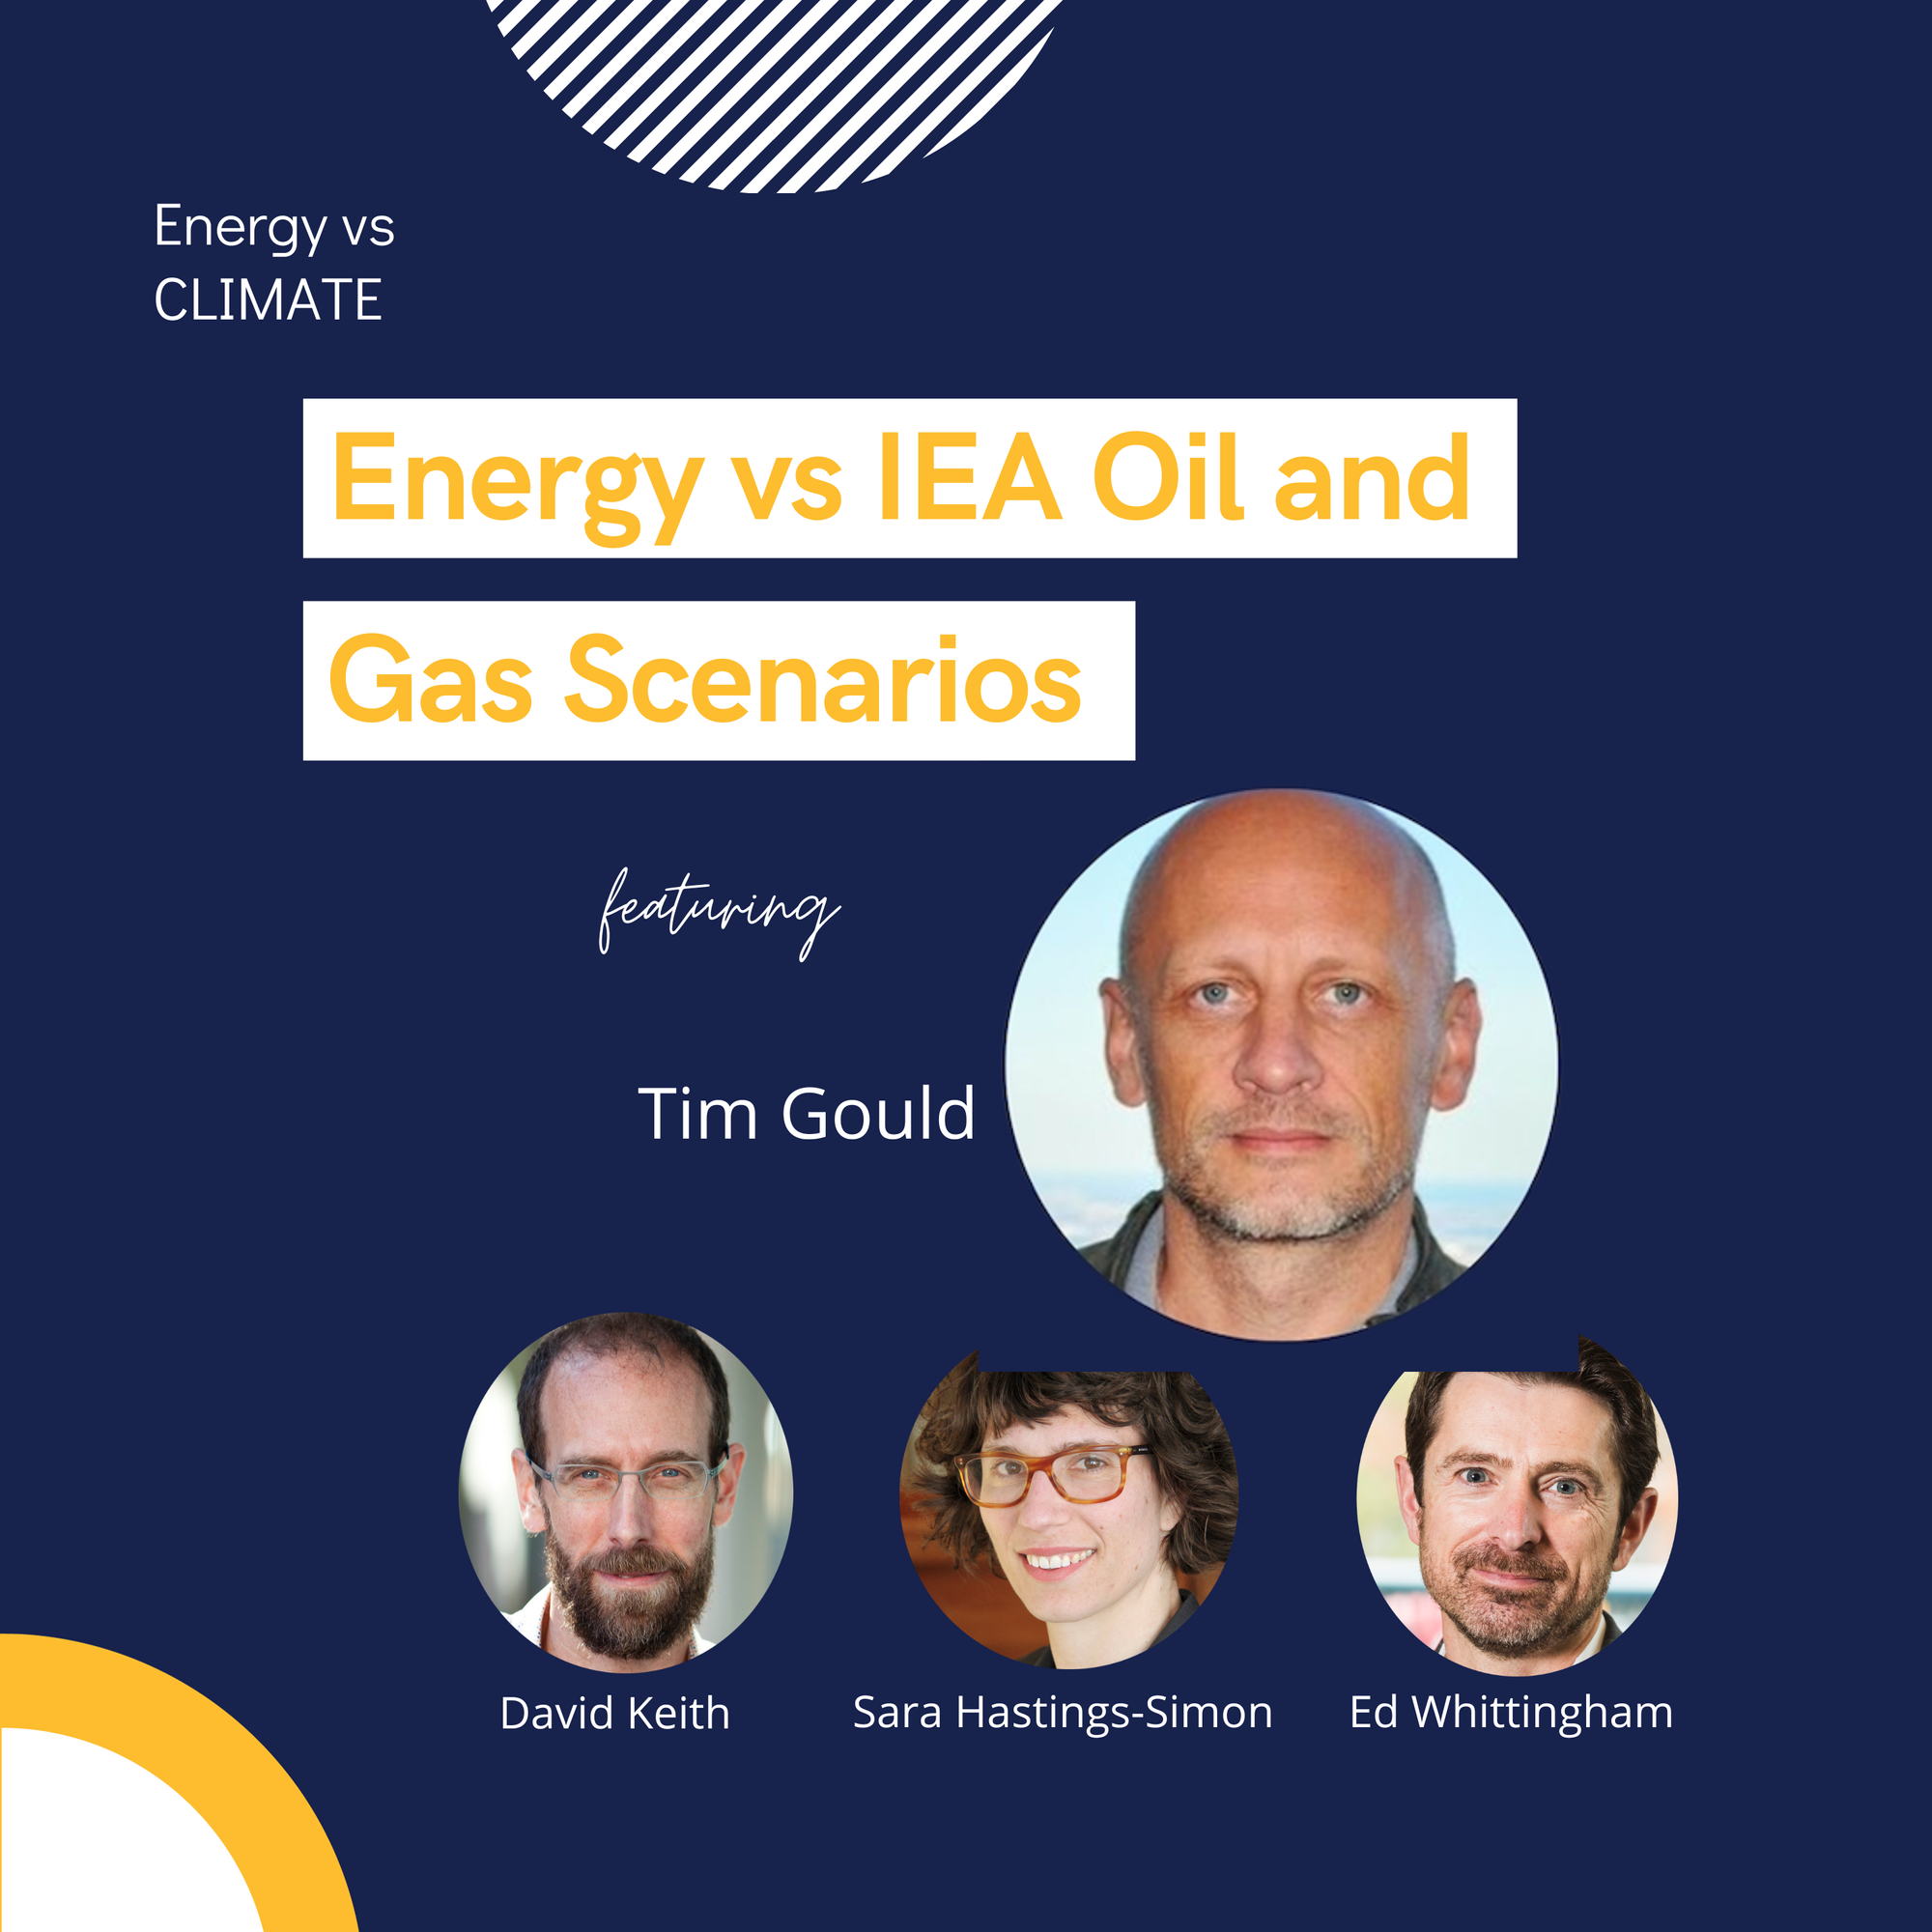 Energy vs IEA Oil and Gas Scenarios